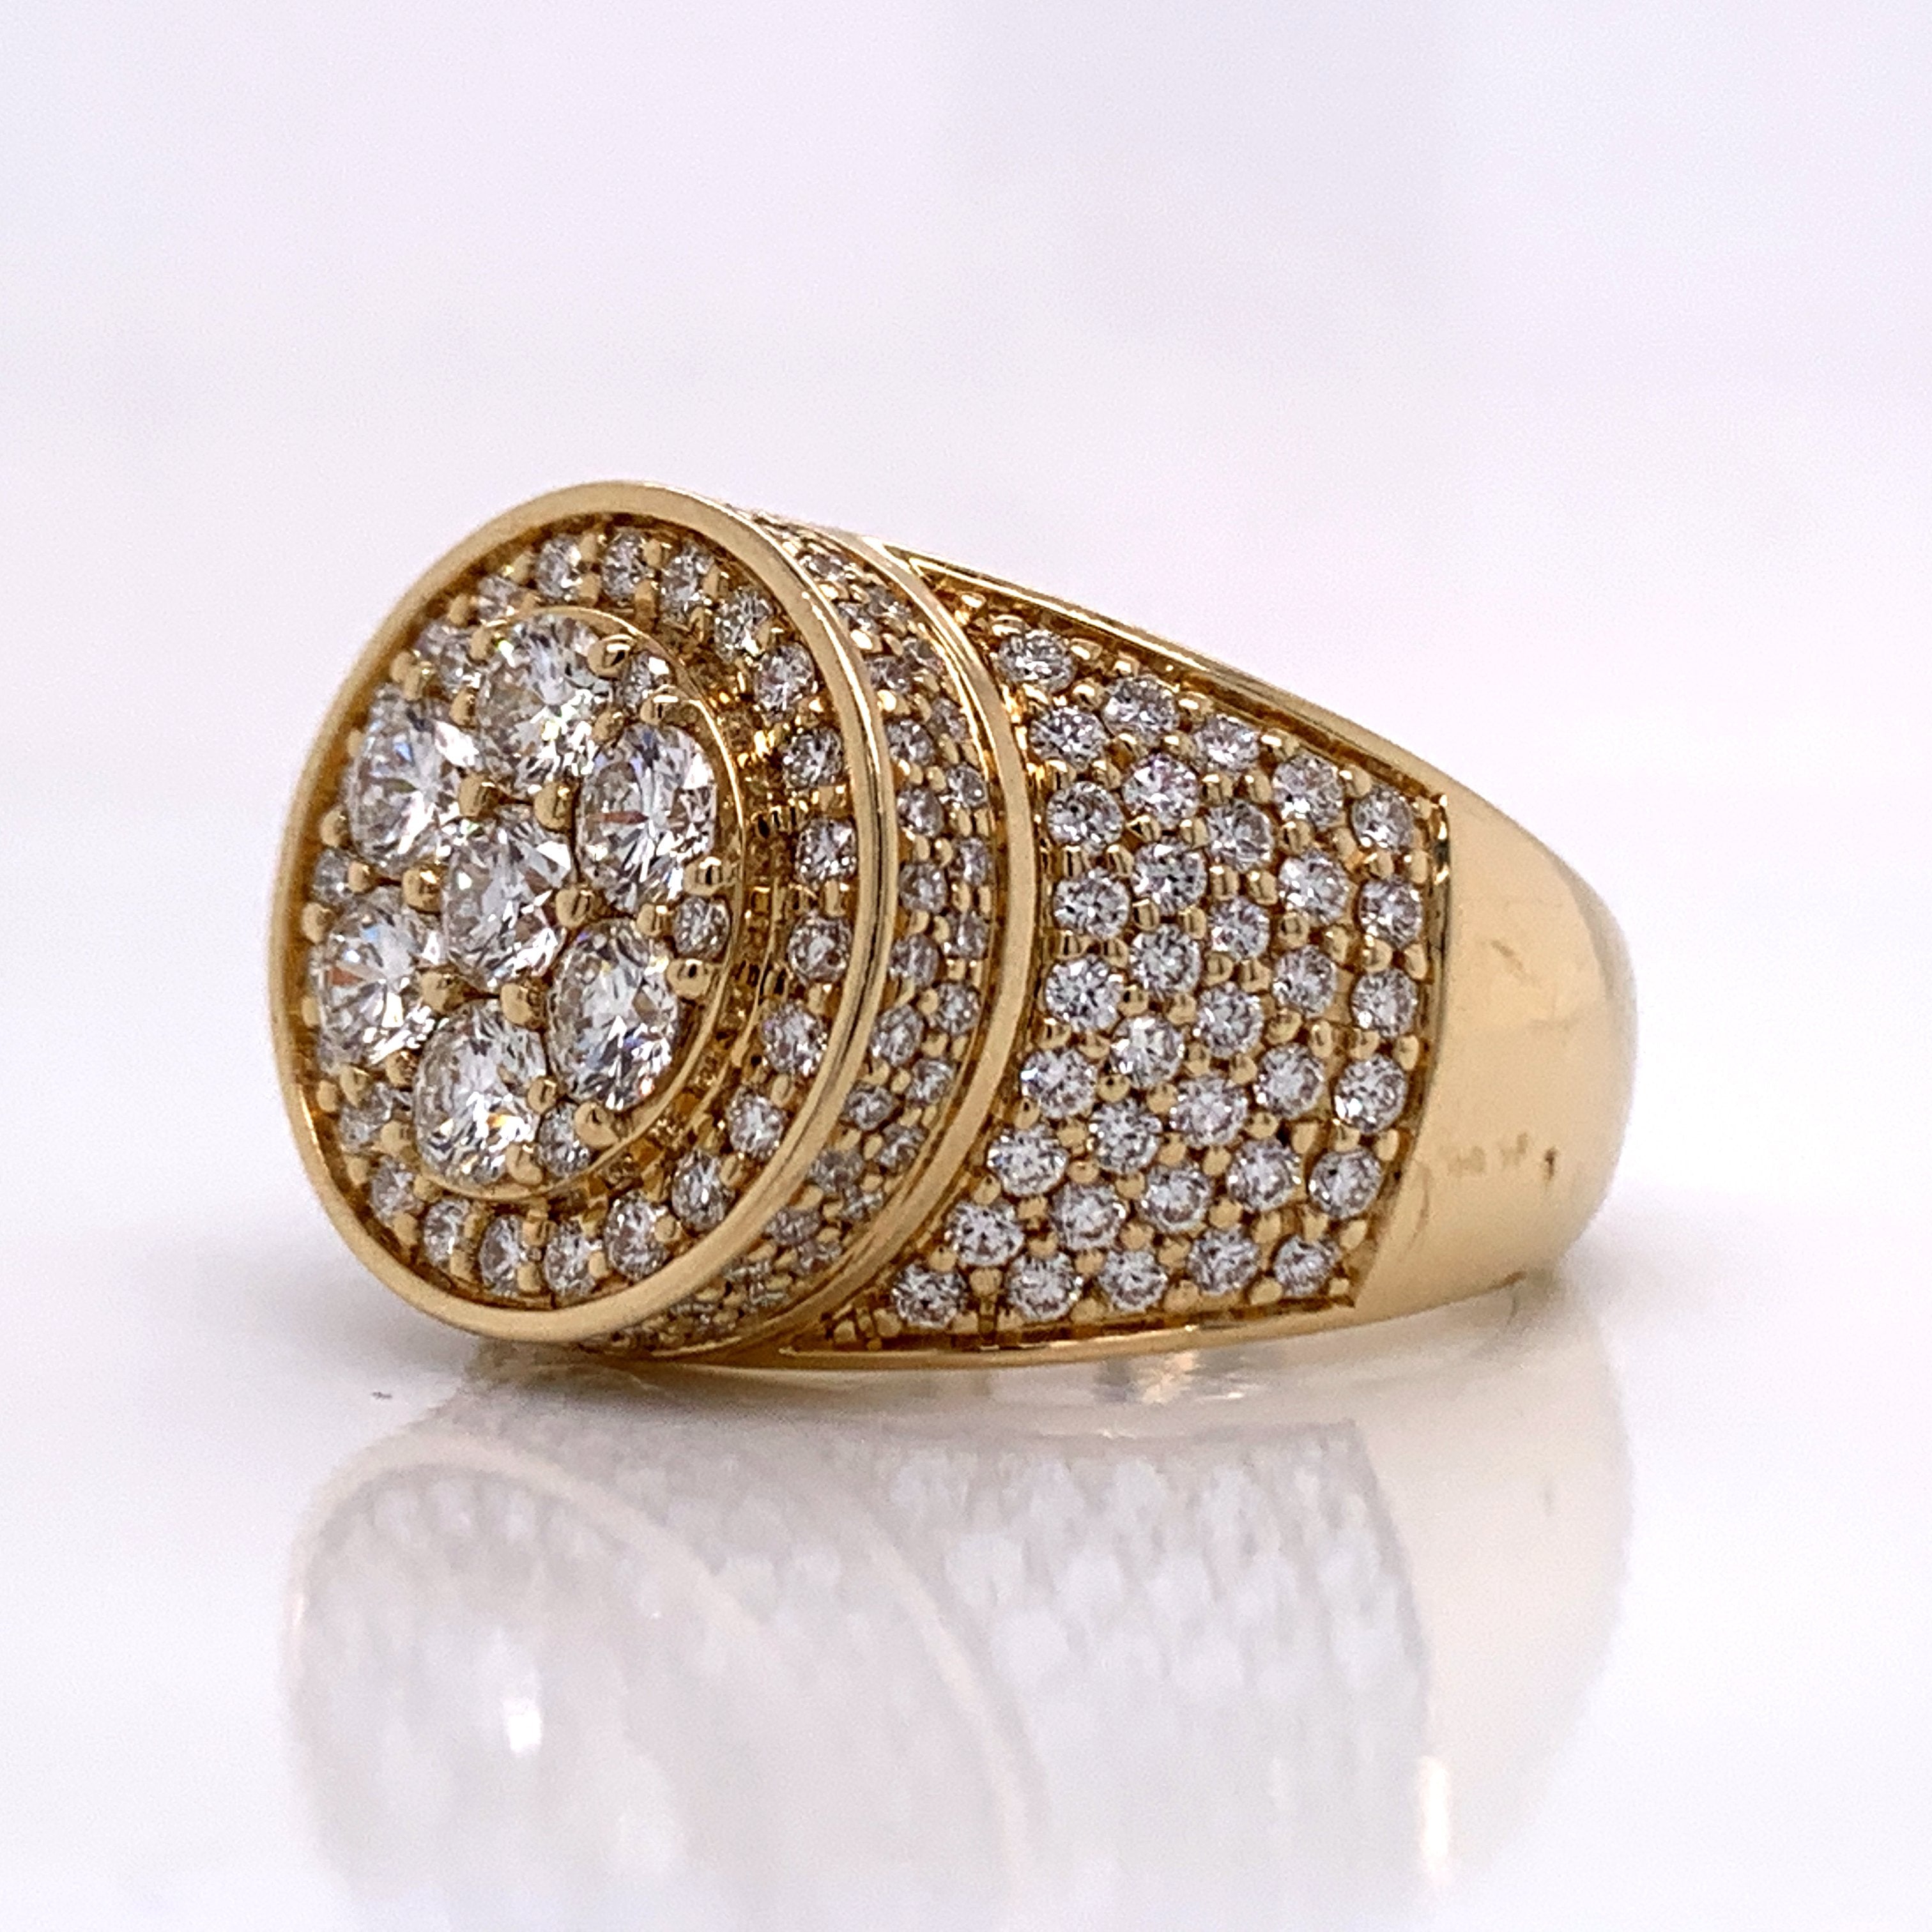 3.50 CT. Diamond Ring in 10K Gold - White Carat Diamonds 